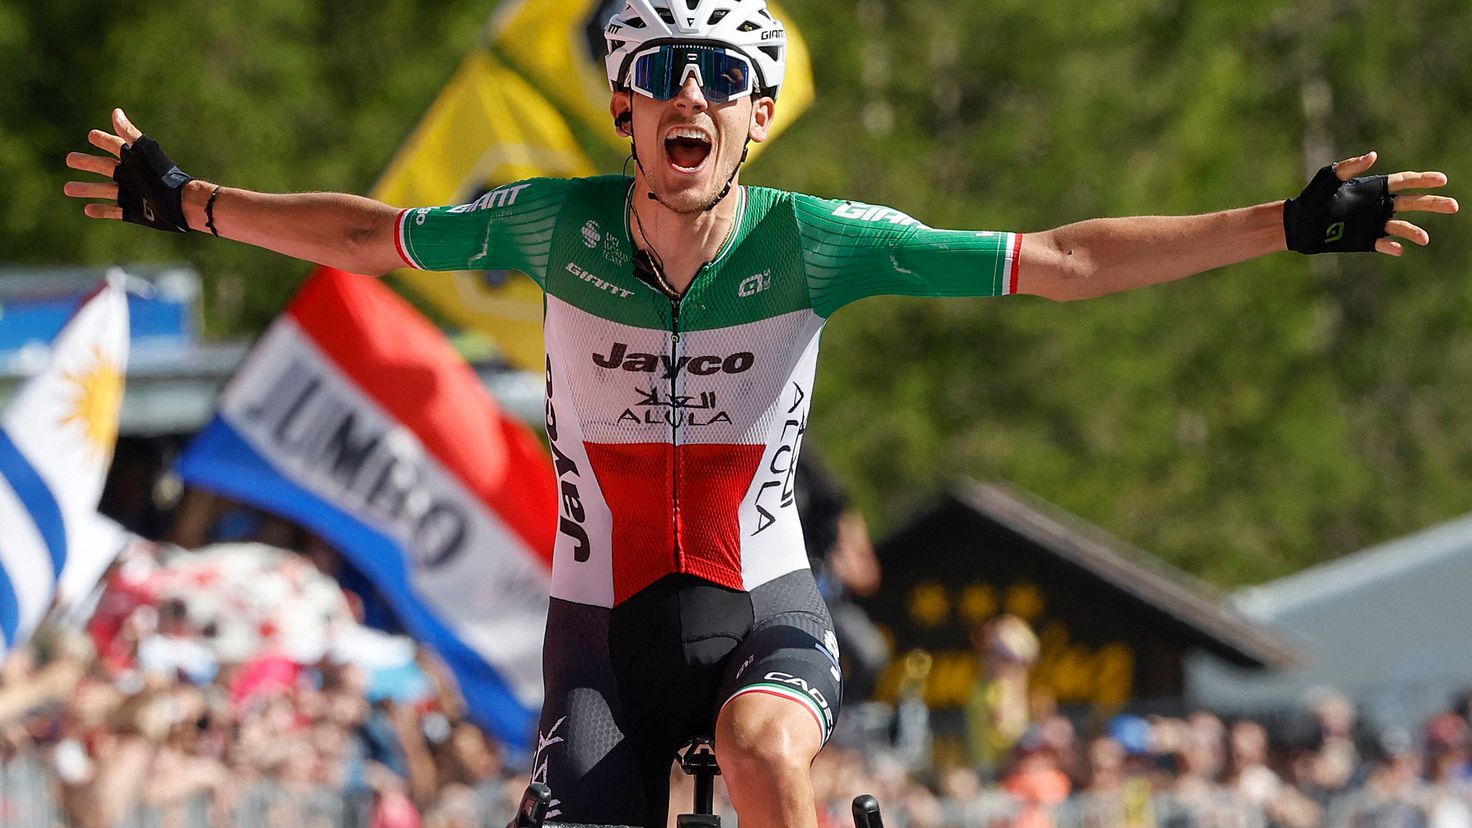 Filippo Zana, the great Italian hope that confirms potential in the Giro
